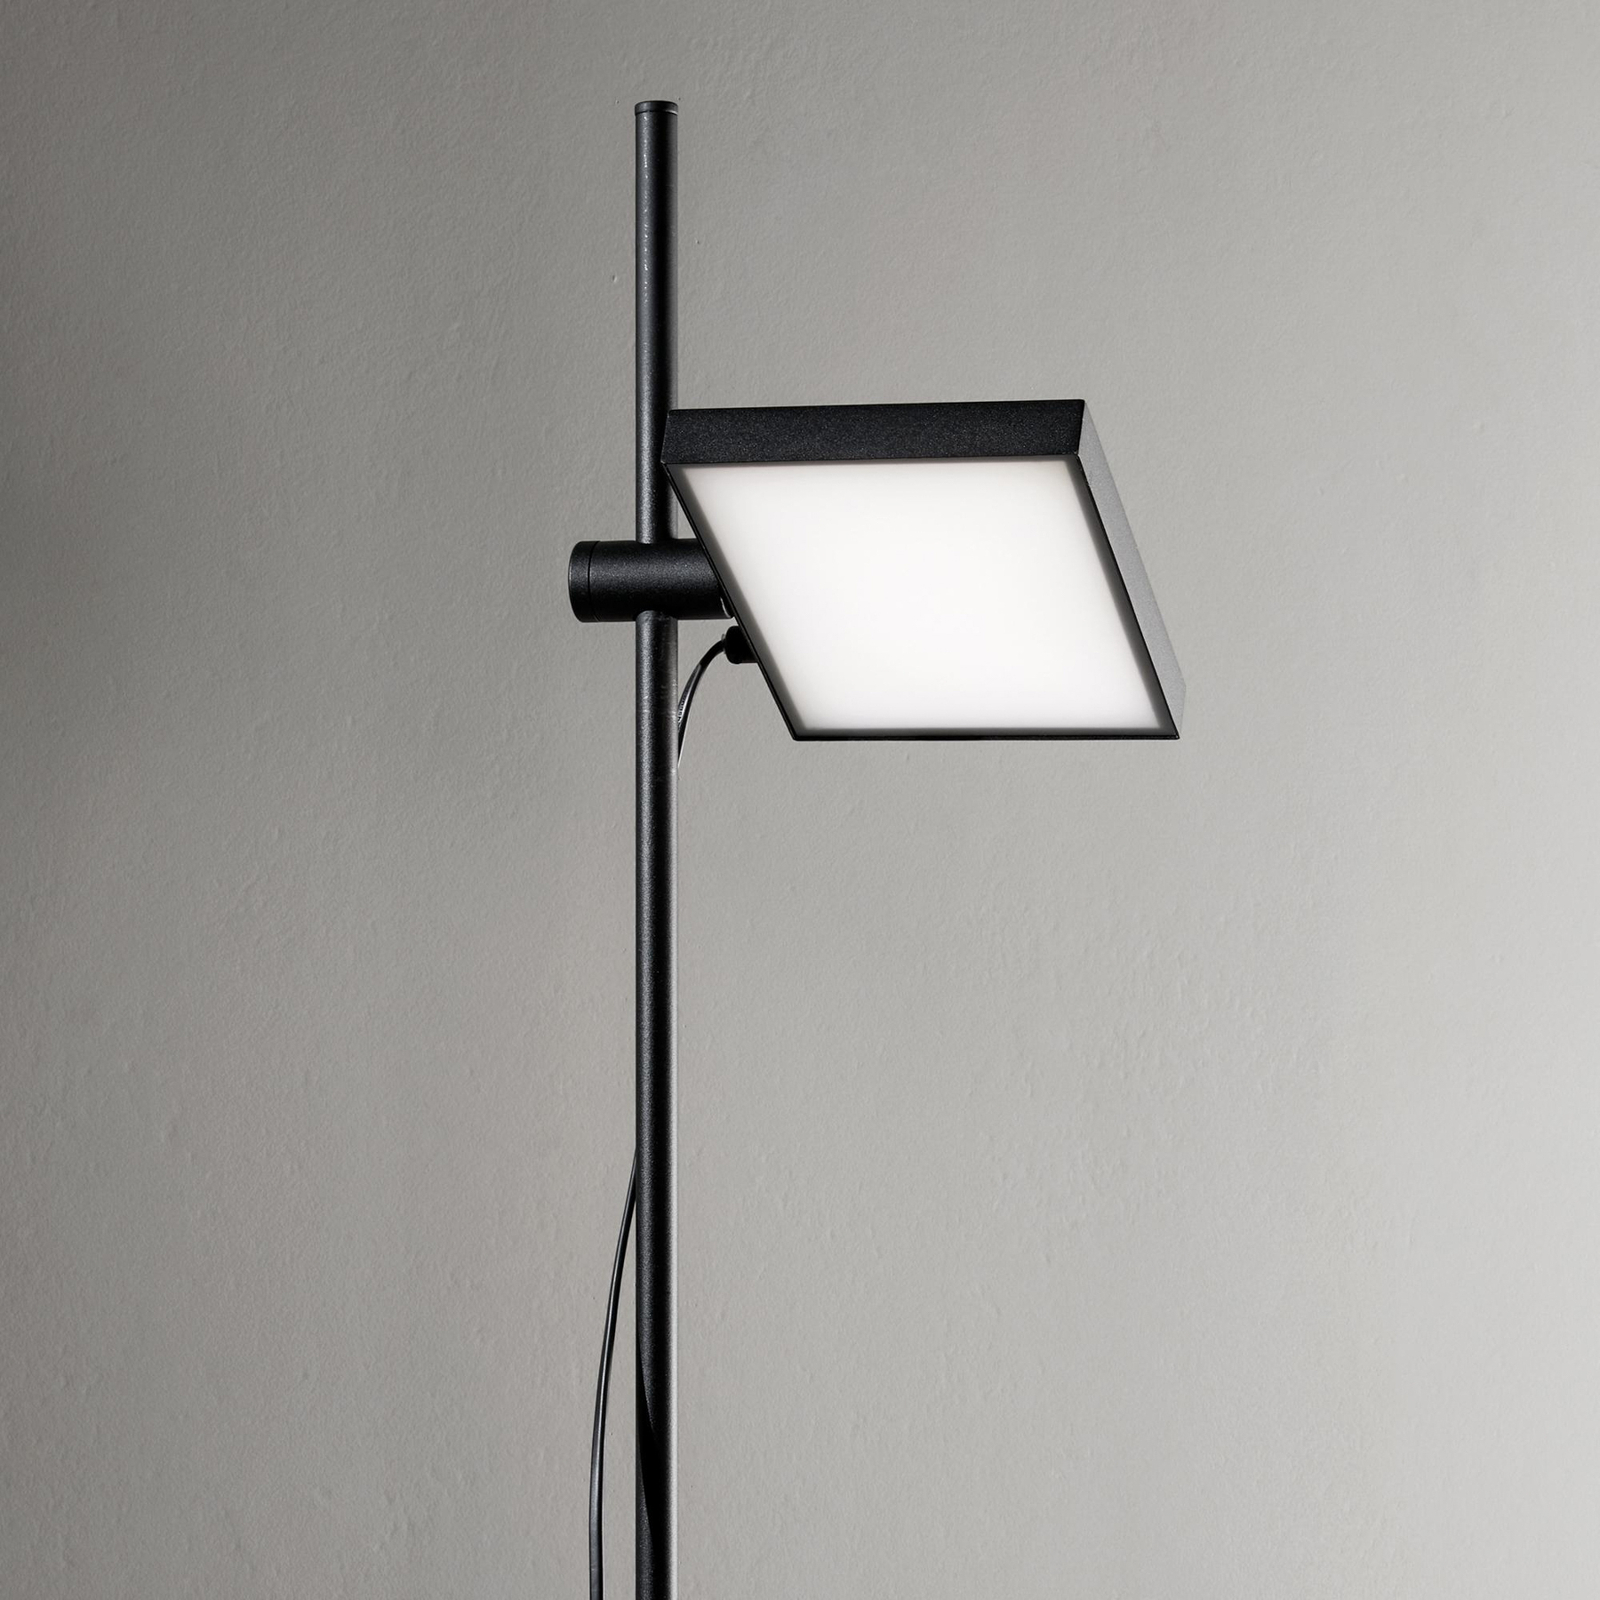 Ideal Lux LED stojacia lampa Lift, čierna, kov, výška 180 cm